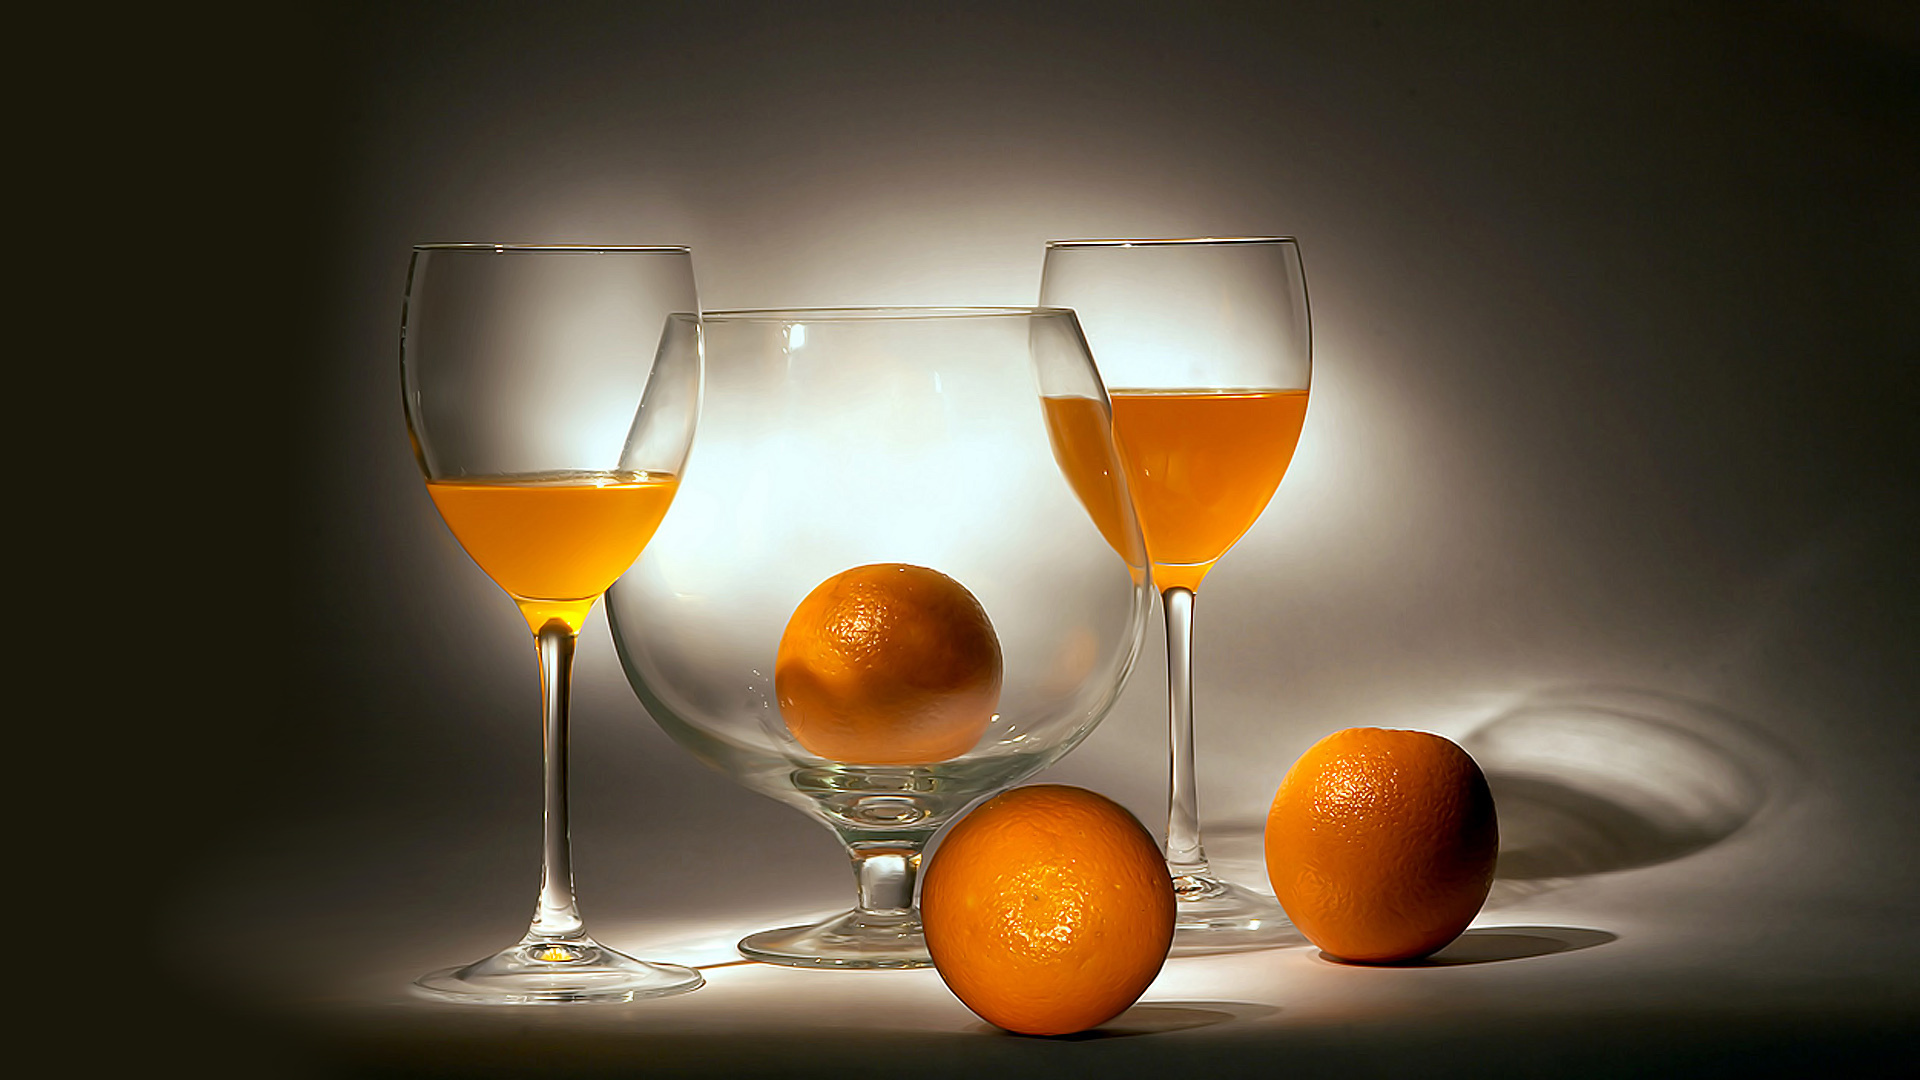 Wallpapers orange juice oranges glasses on the desktop